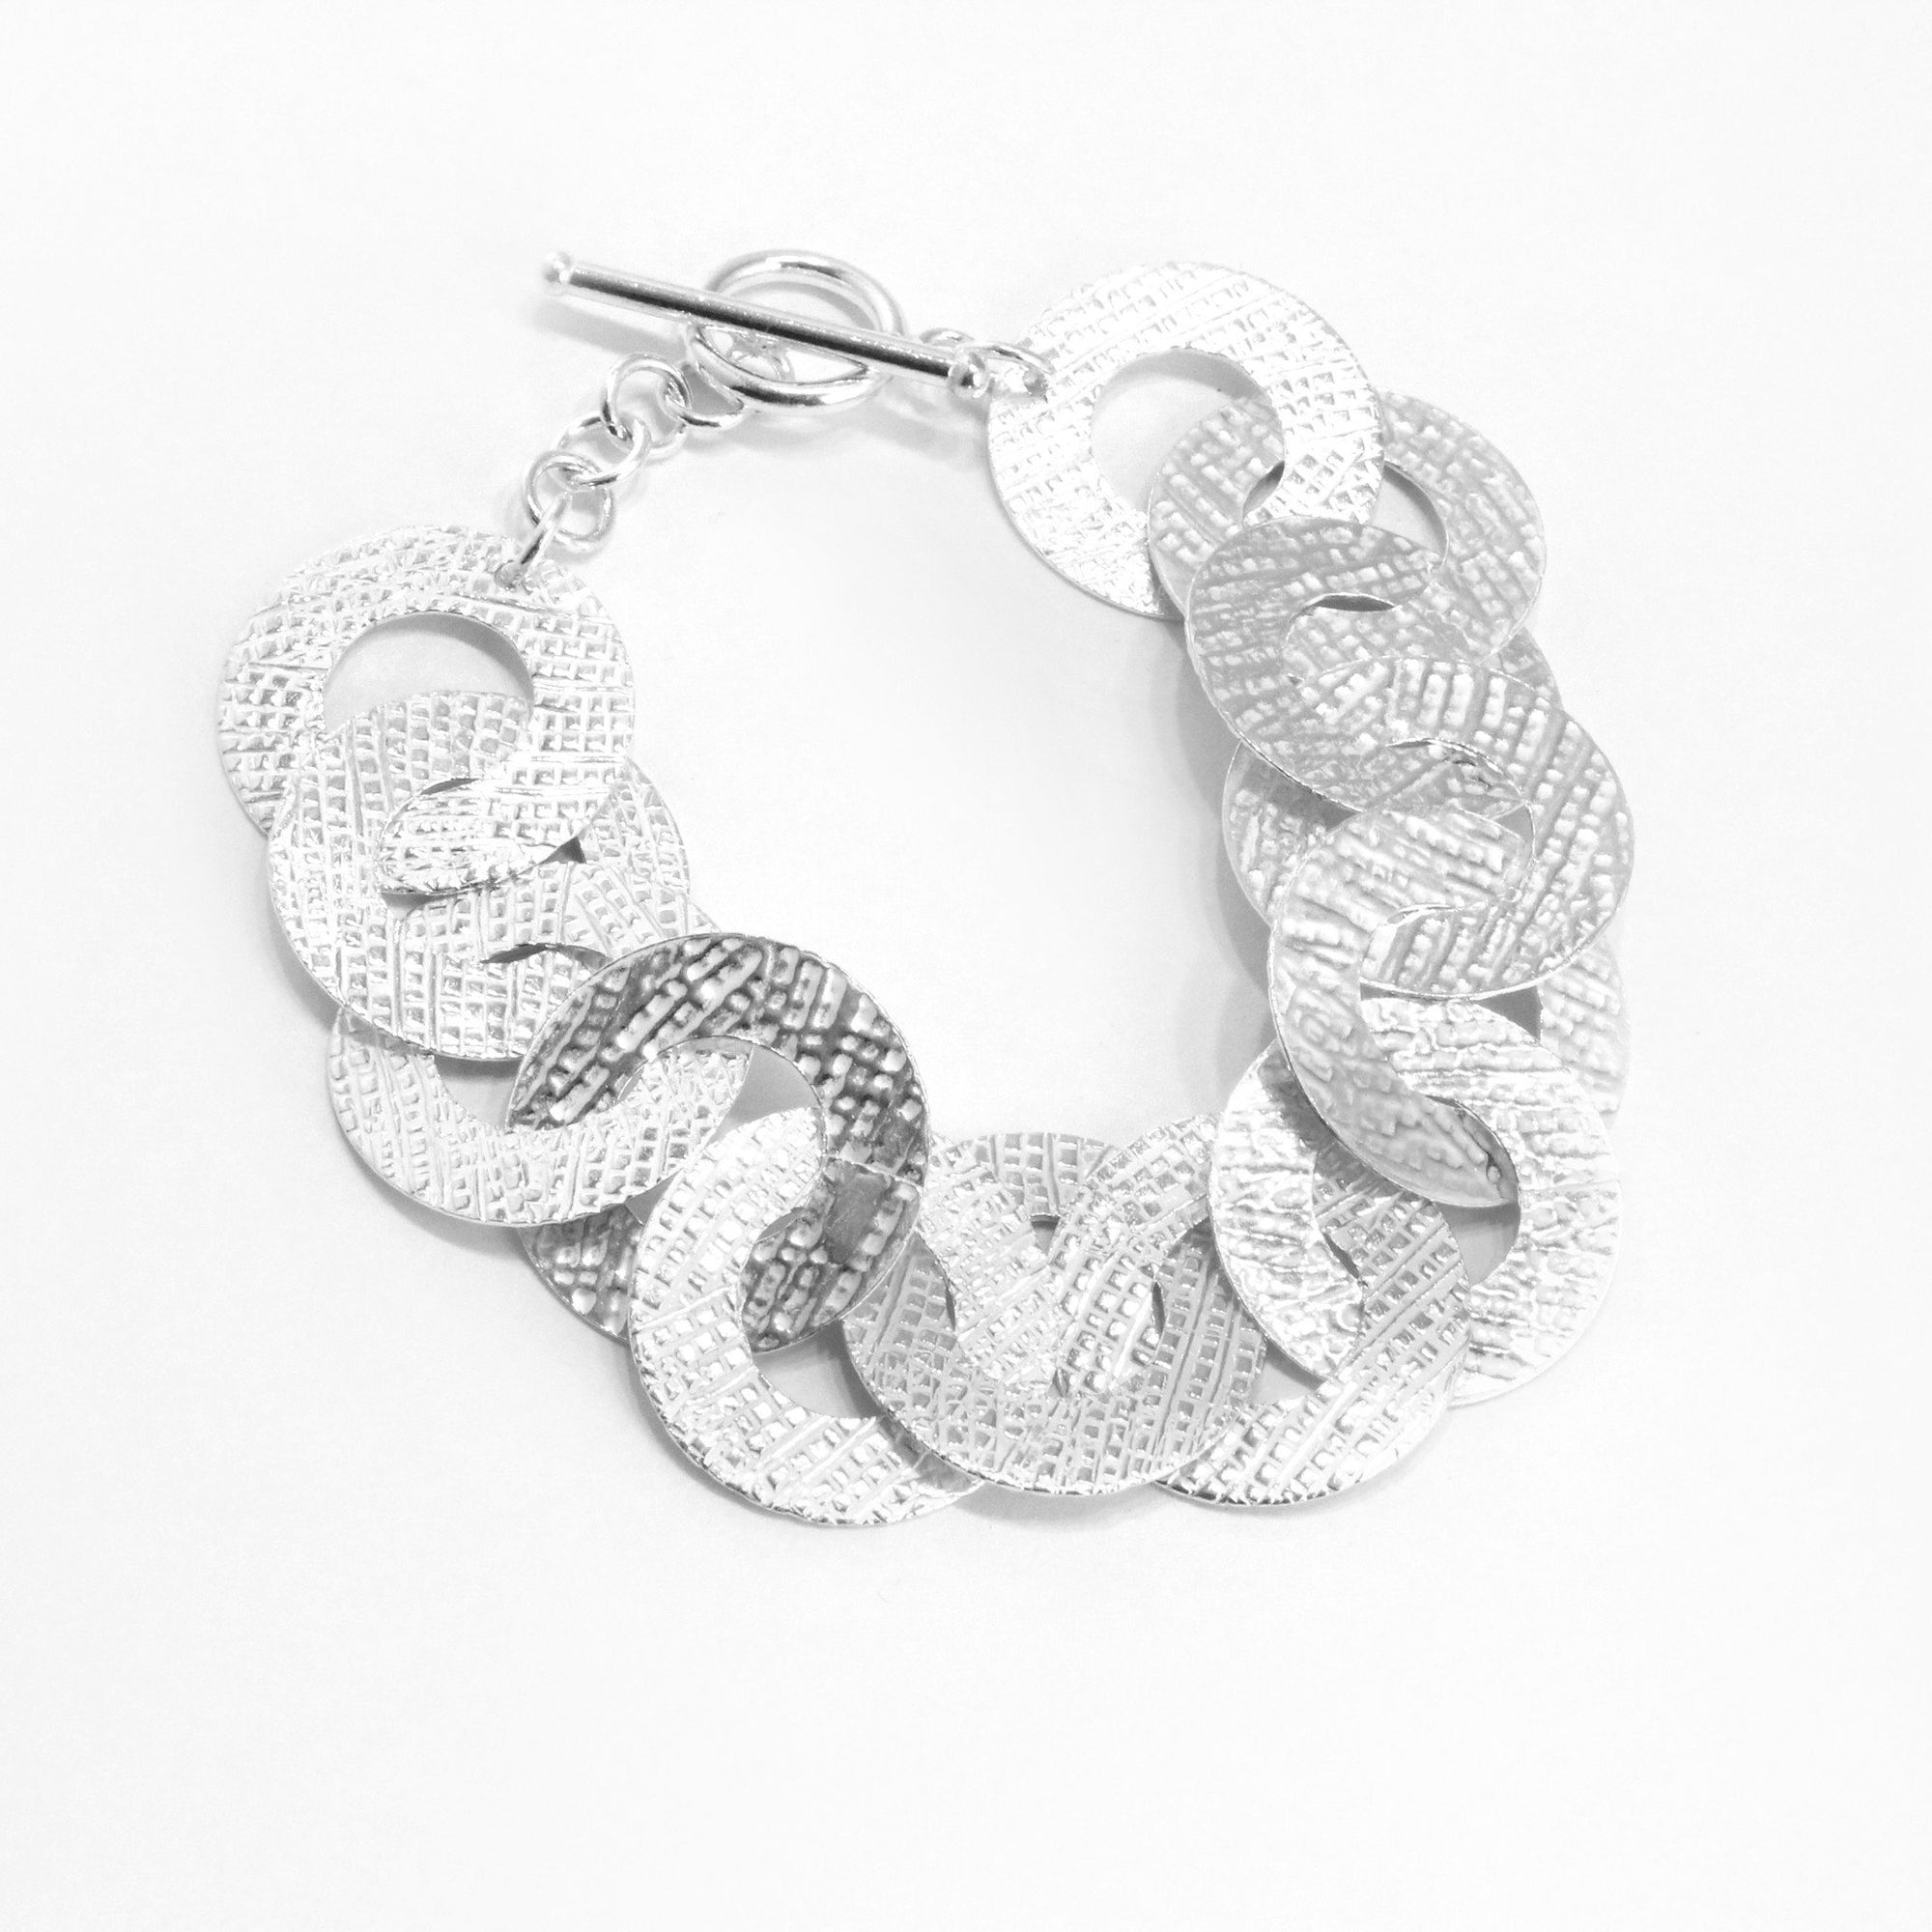 Circles textured Sterling Silver Bracelet - Qinti - The Peruvian Shop